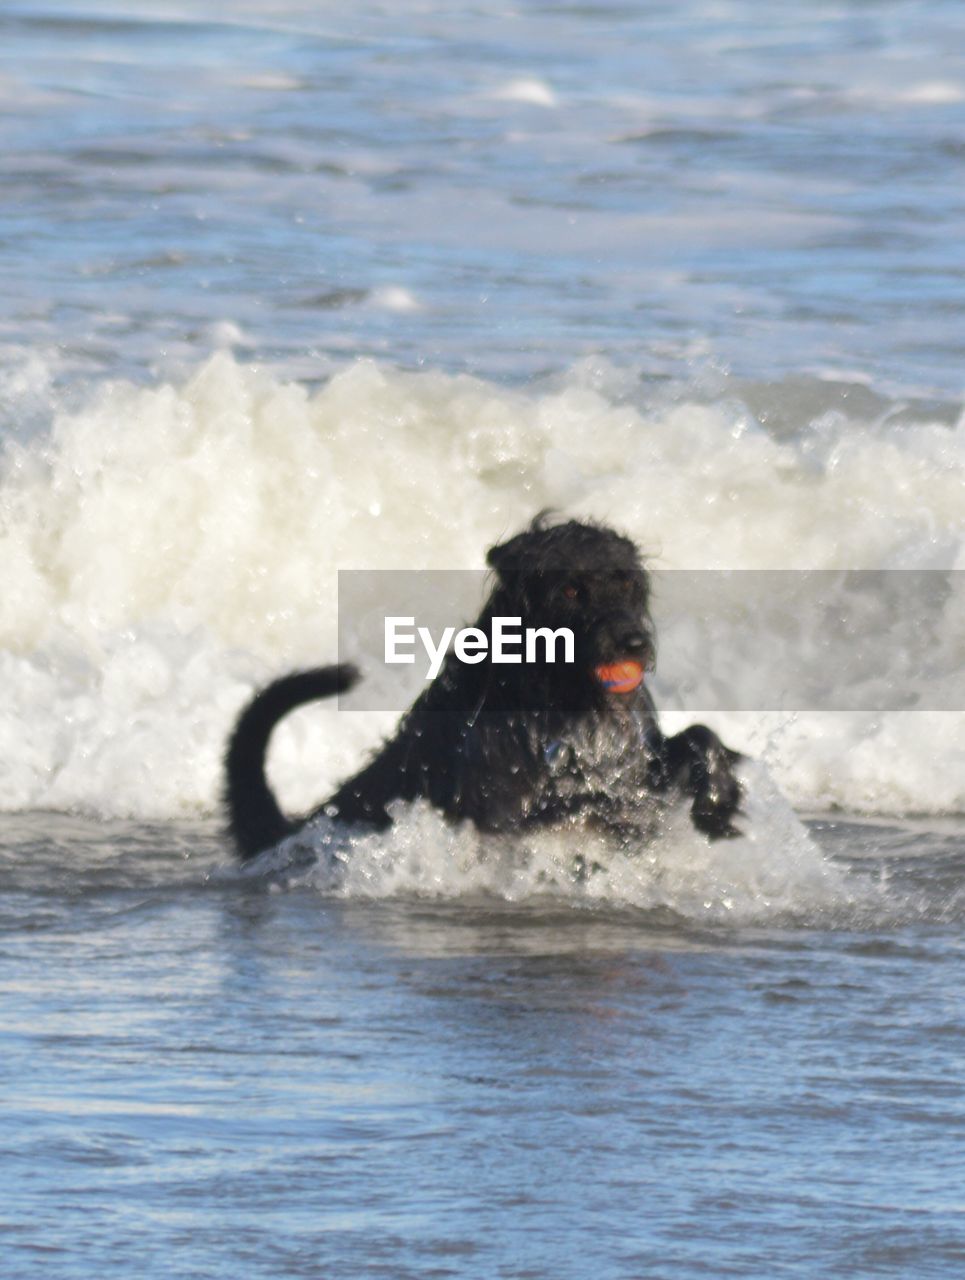 DOG ON SEA WAVES SPLASHING